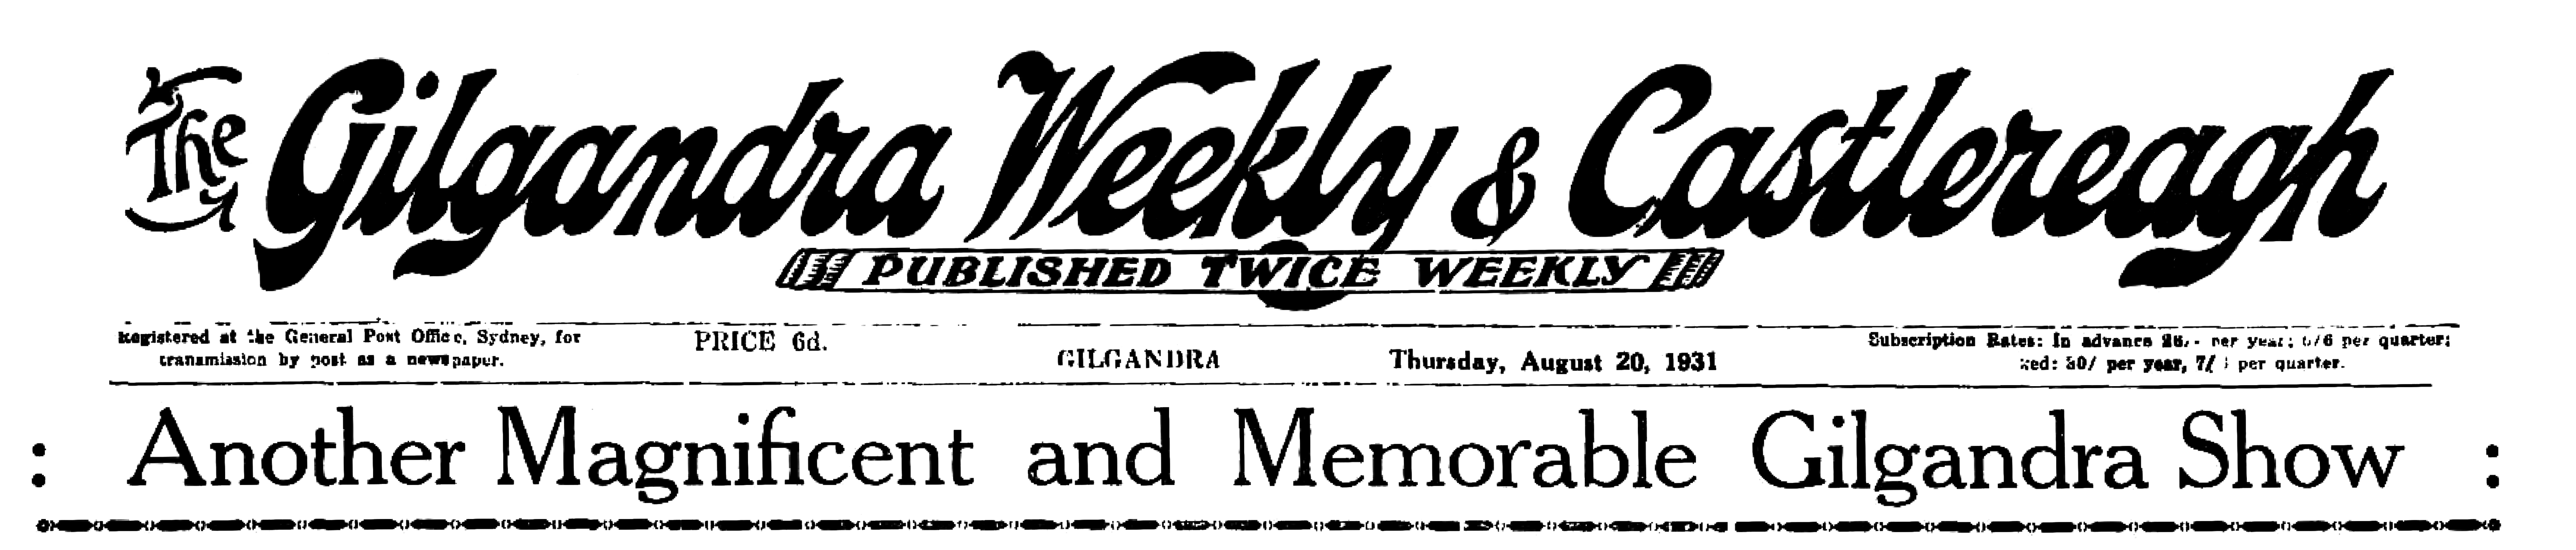 GWC 1931 Headline